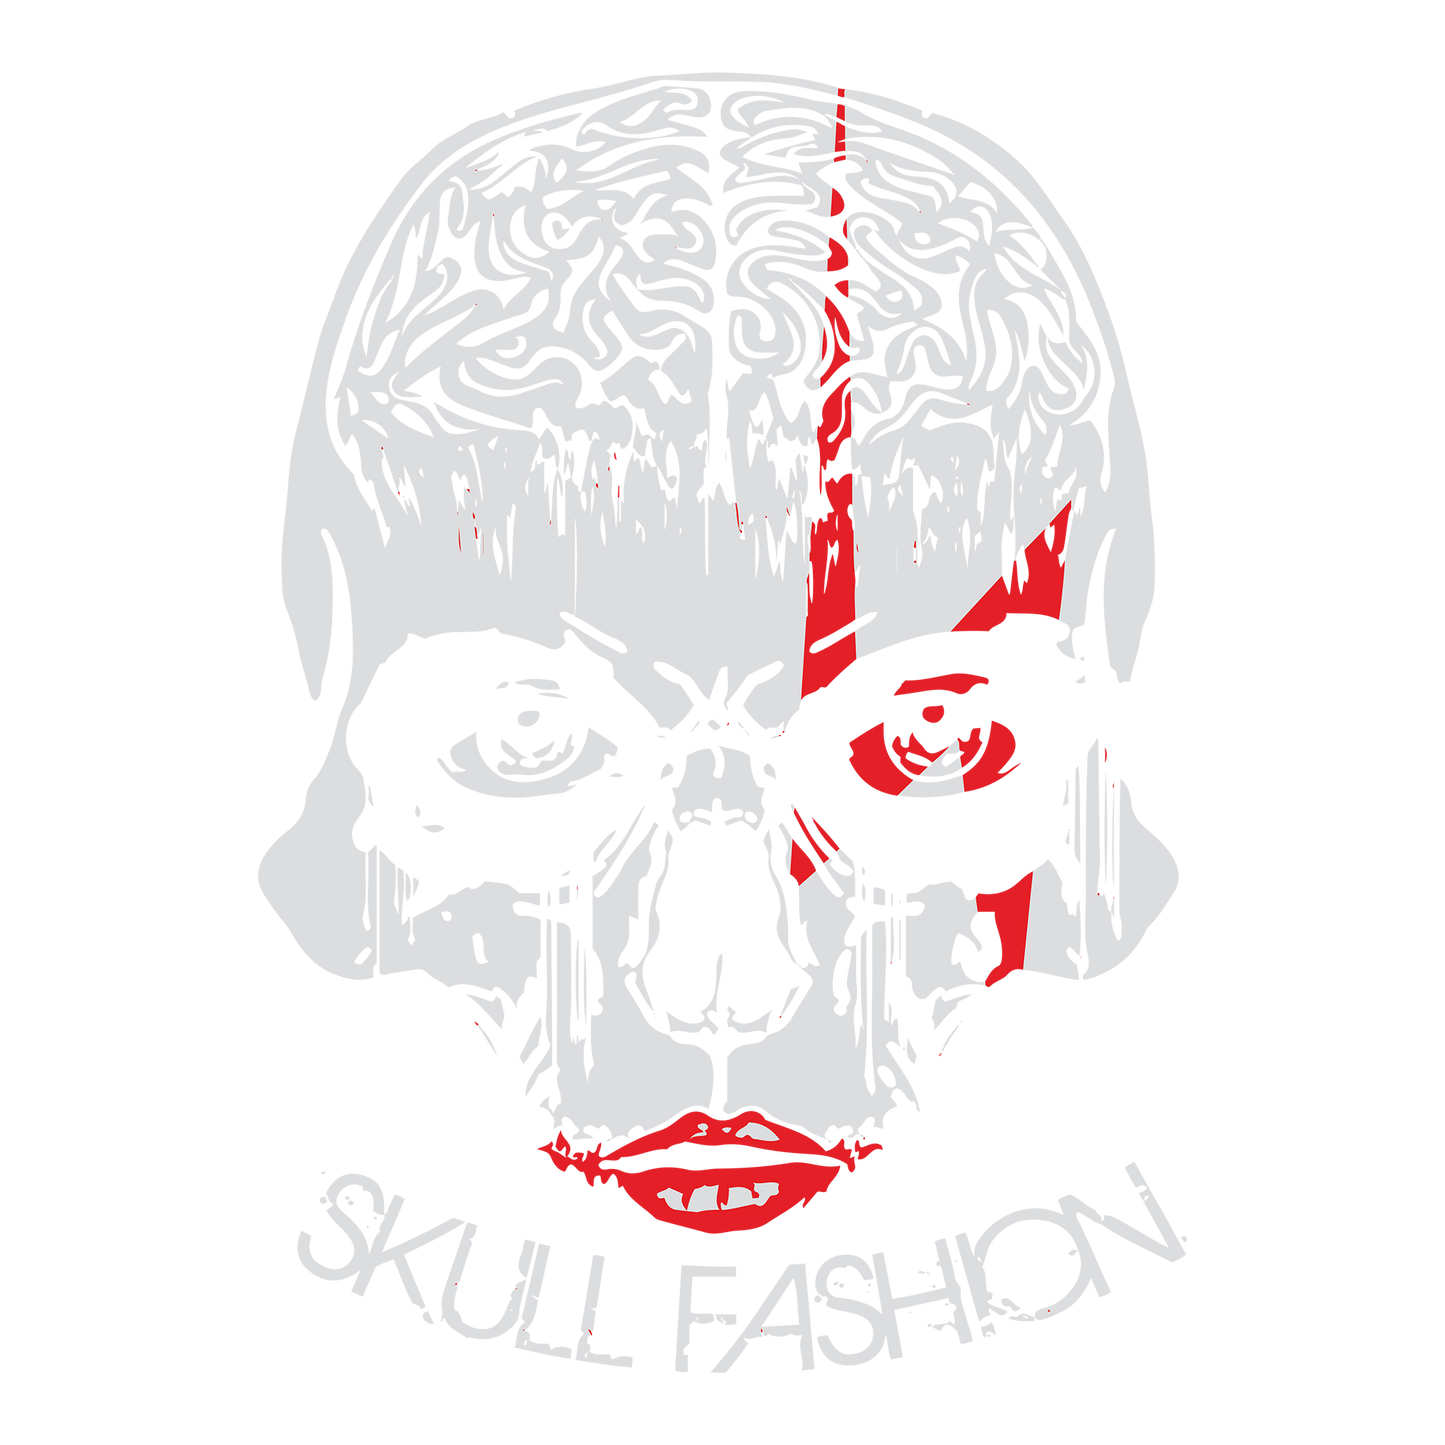 Skull Fashion